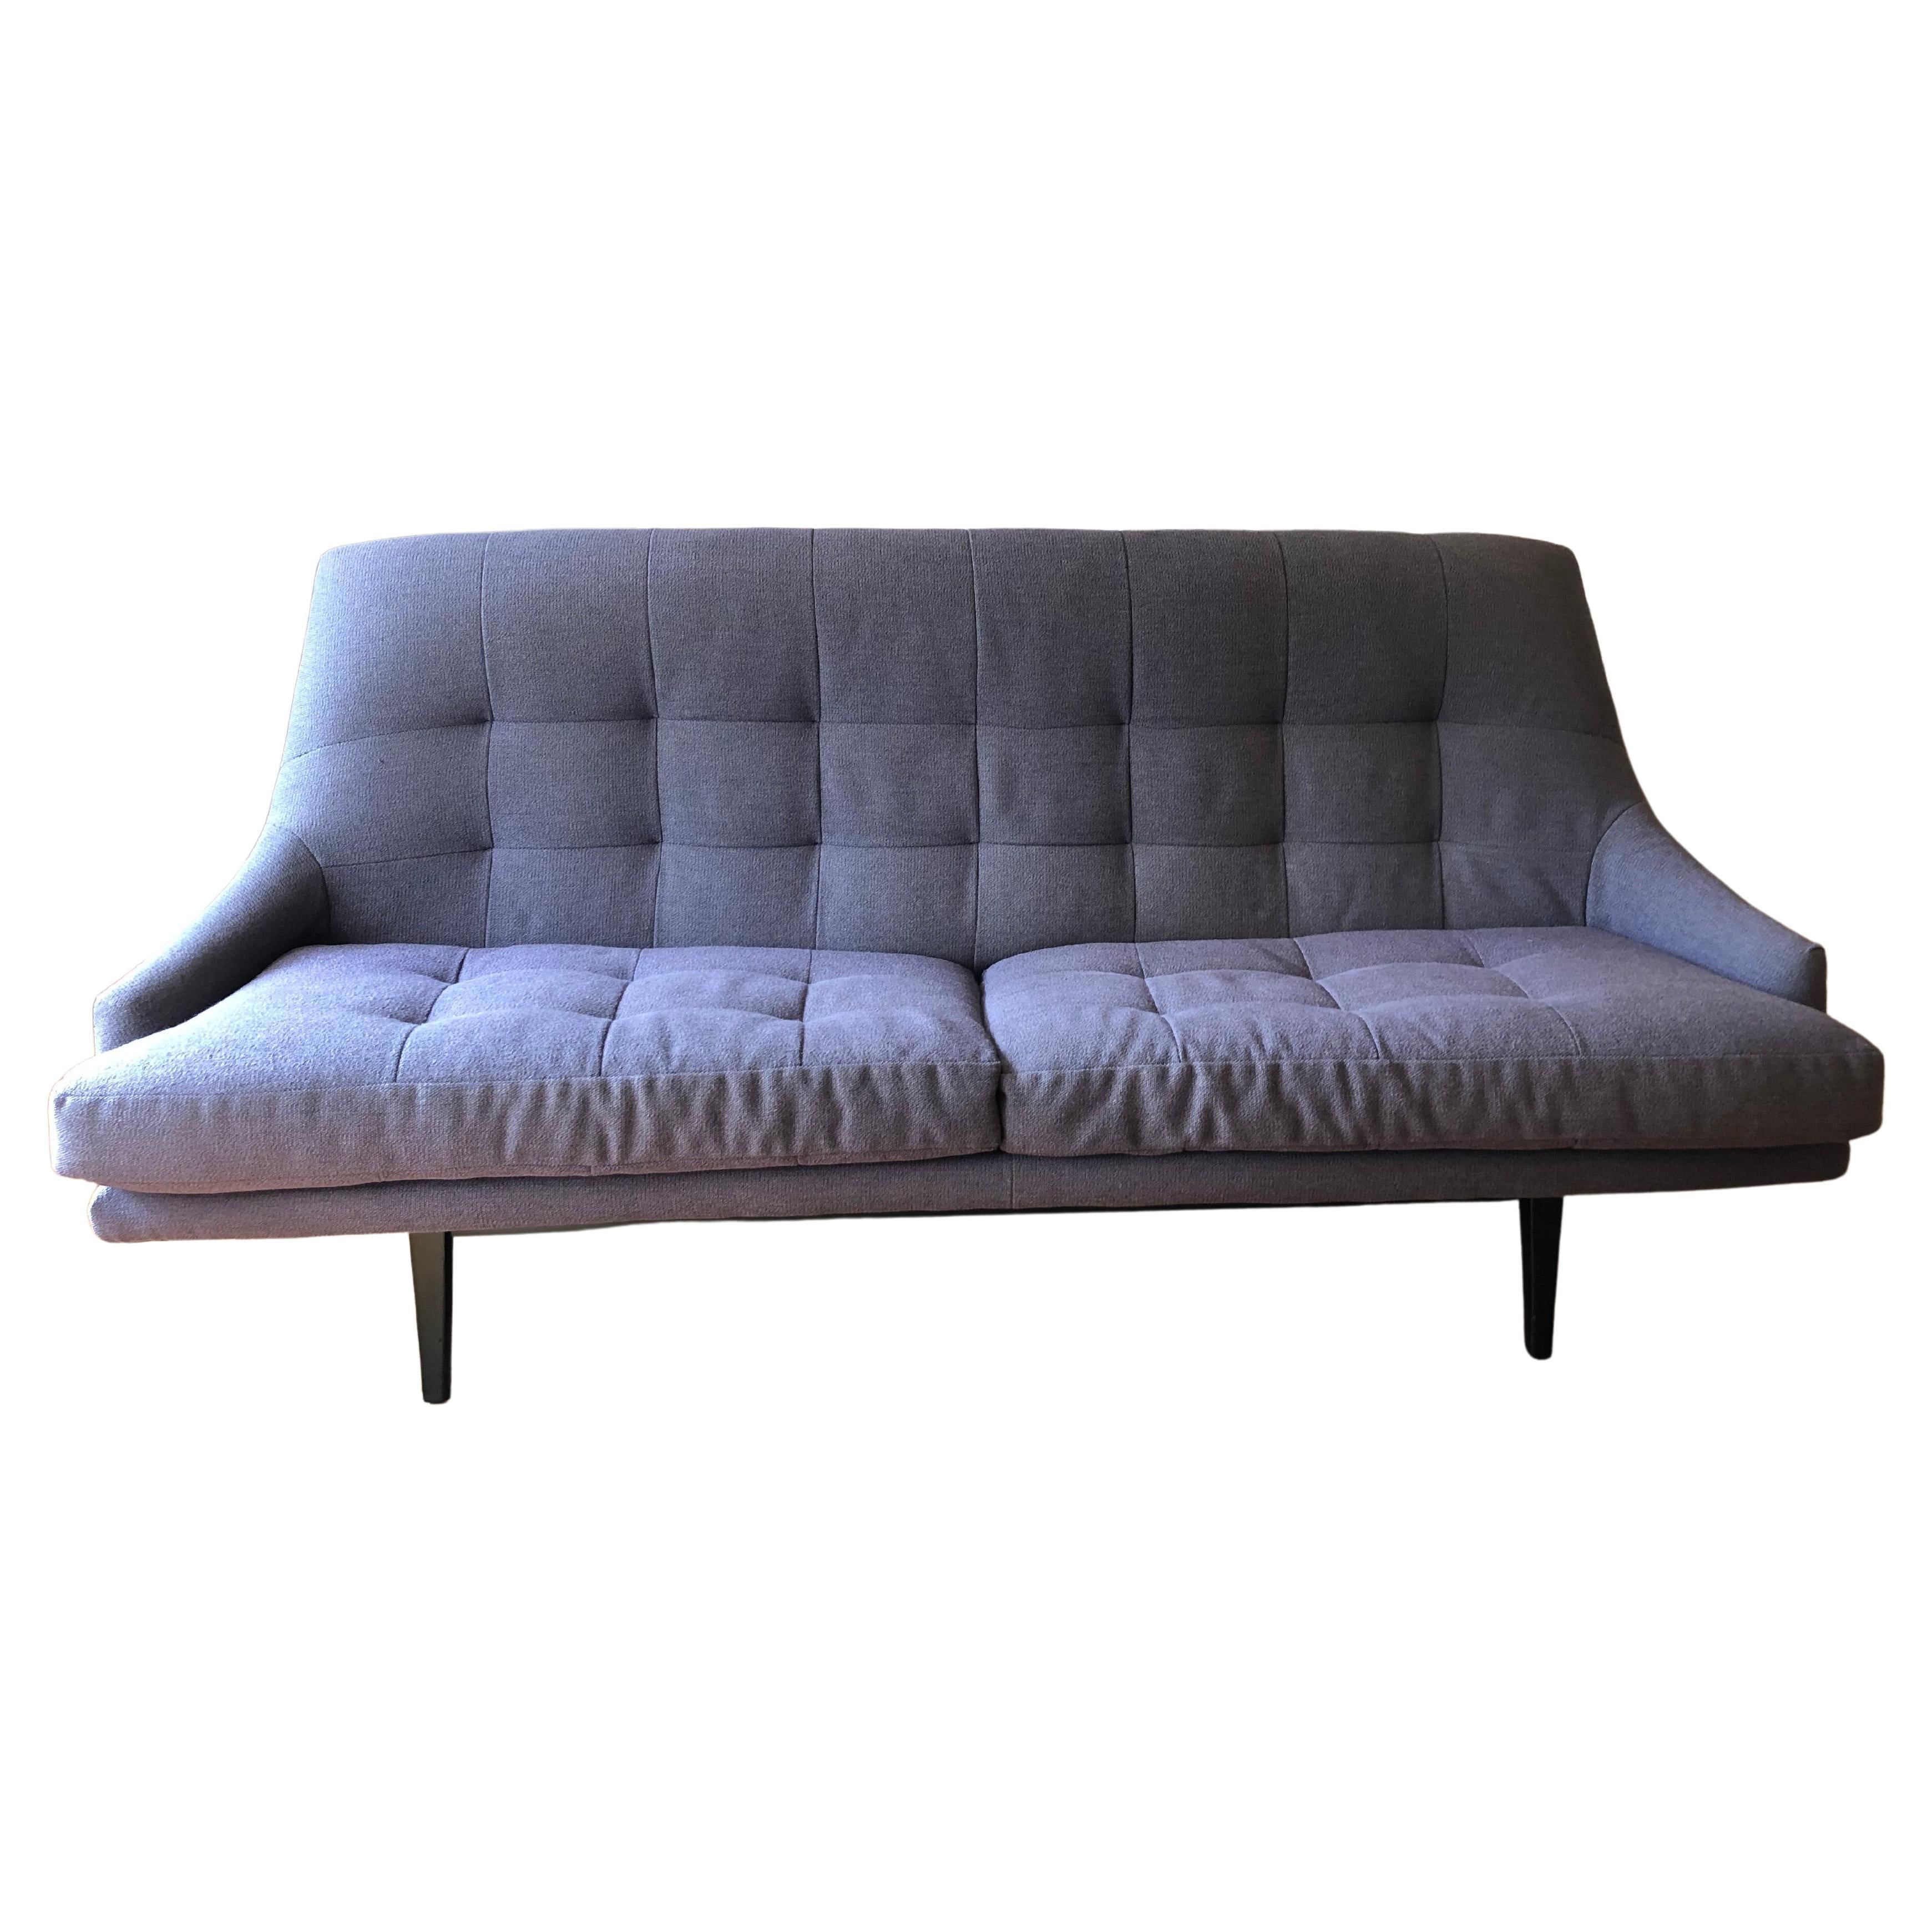 Swedish Vintage Mid Century Modern Sofa  For Sale